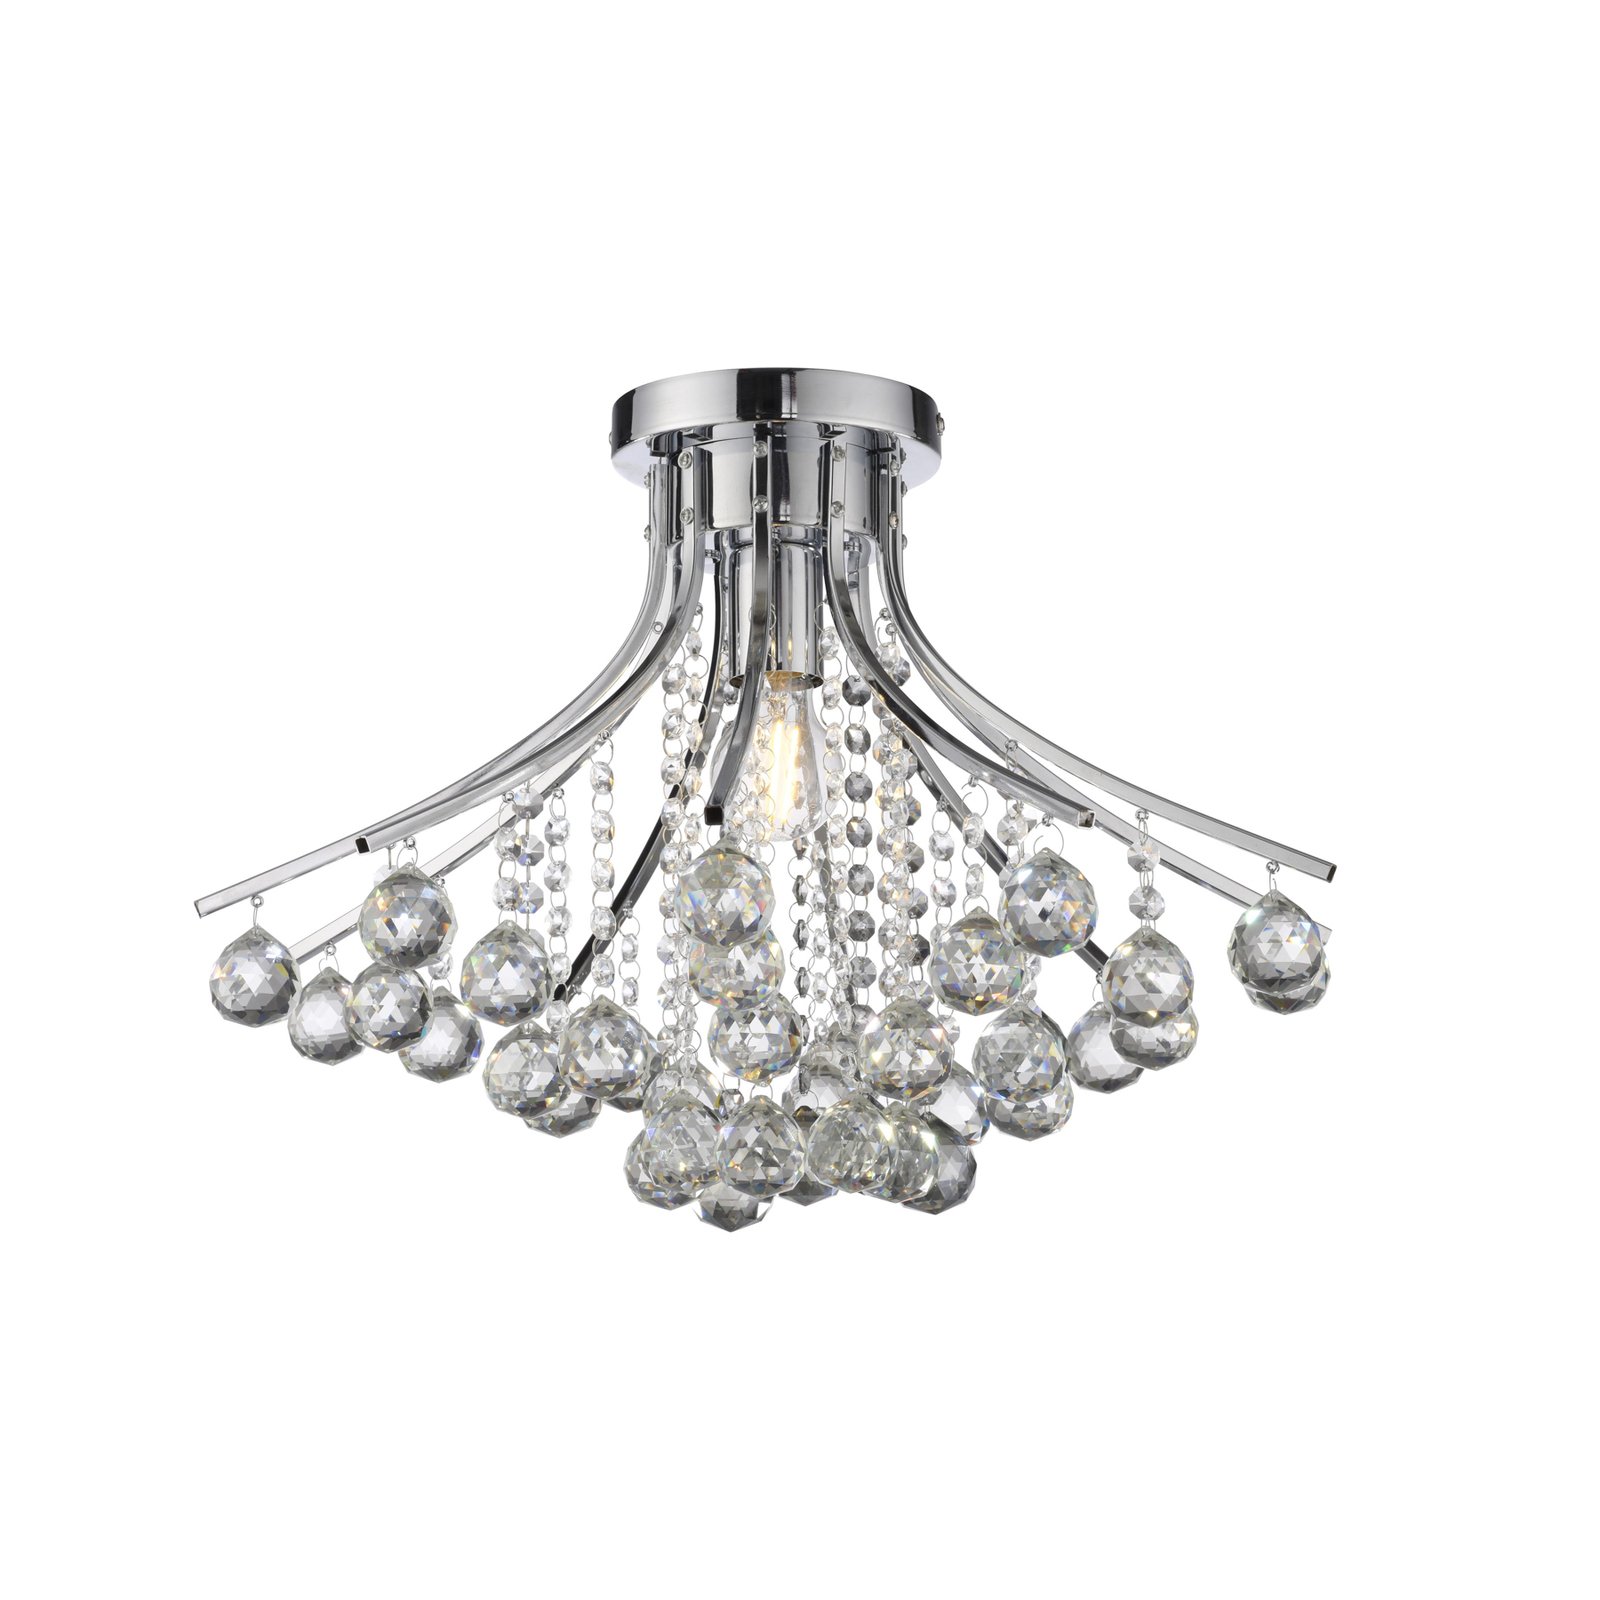 JUST LIGHT. Kulunka ceiling lamp, crystal glass drops, chrome